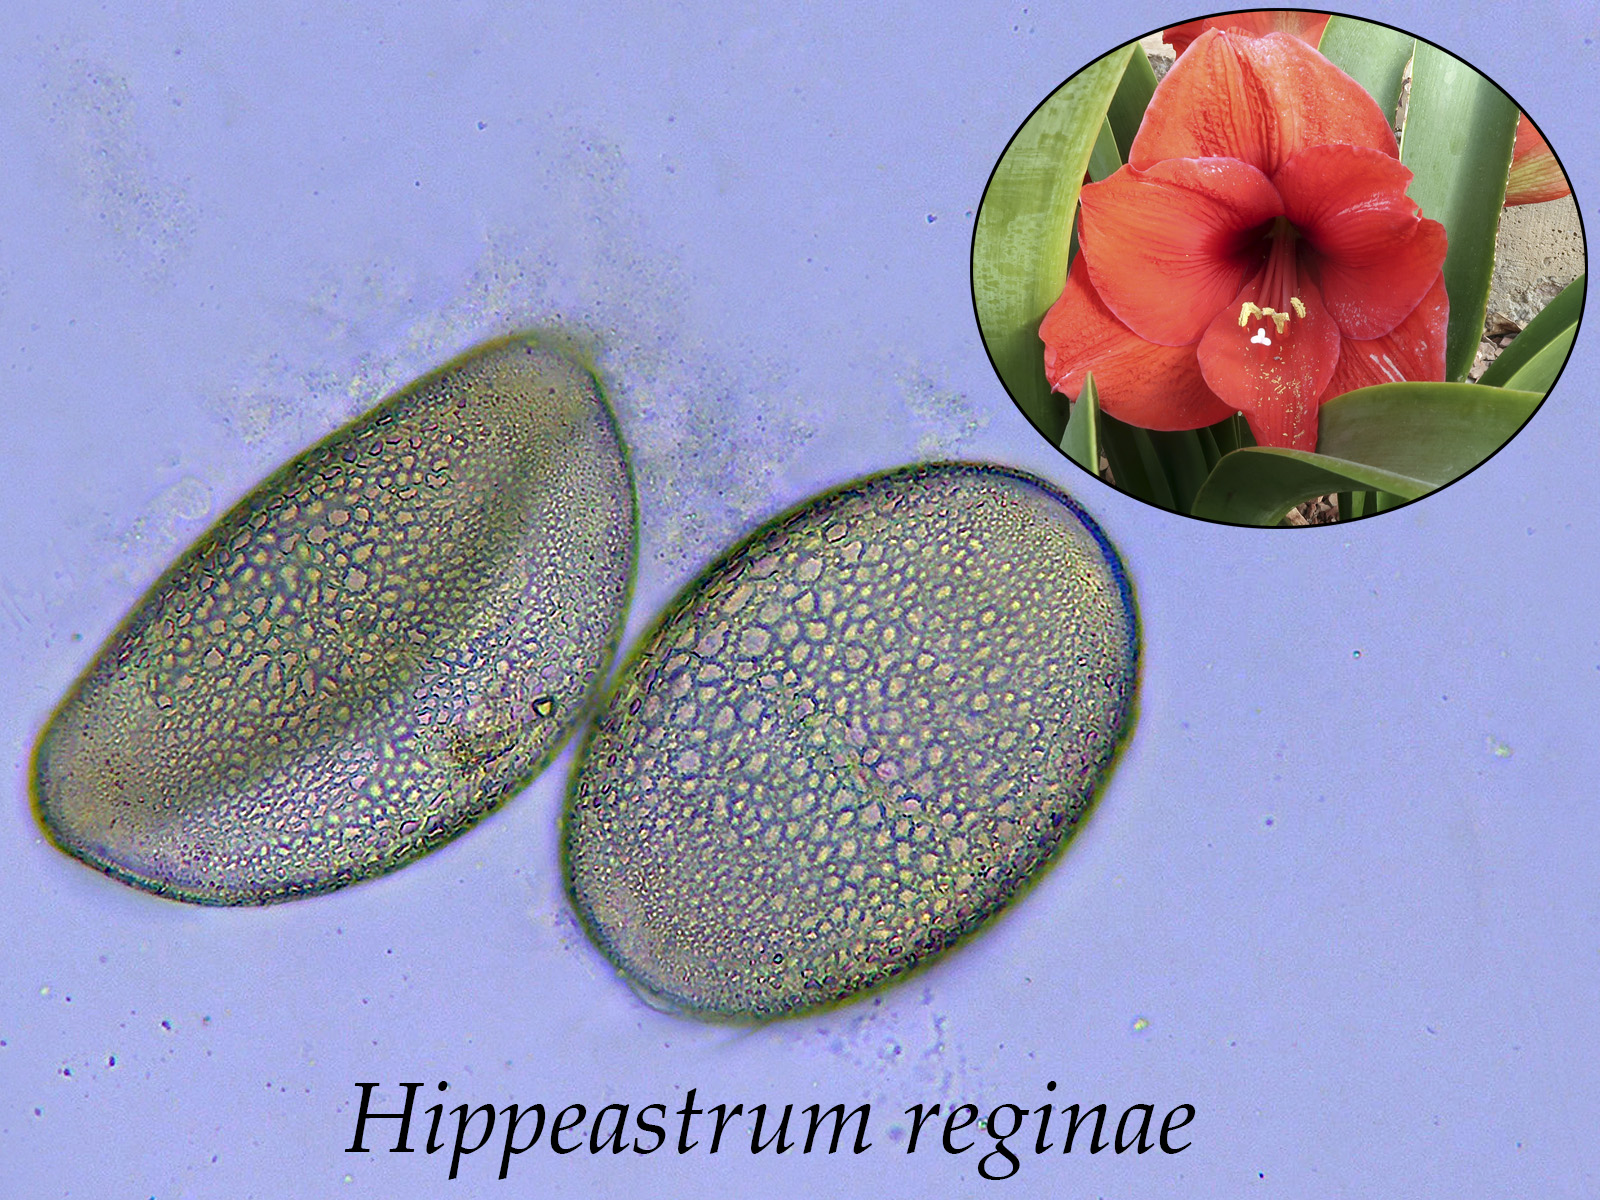 Hippeastrumreginae.jpg